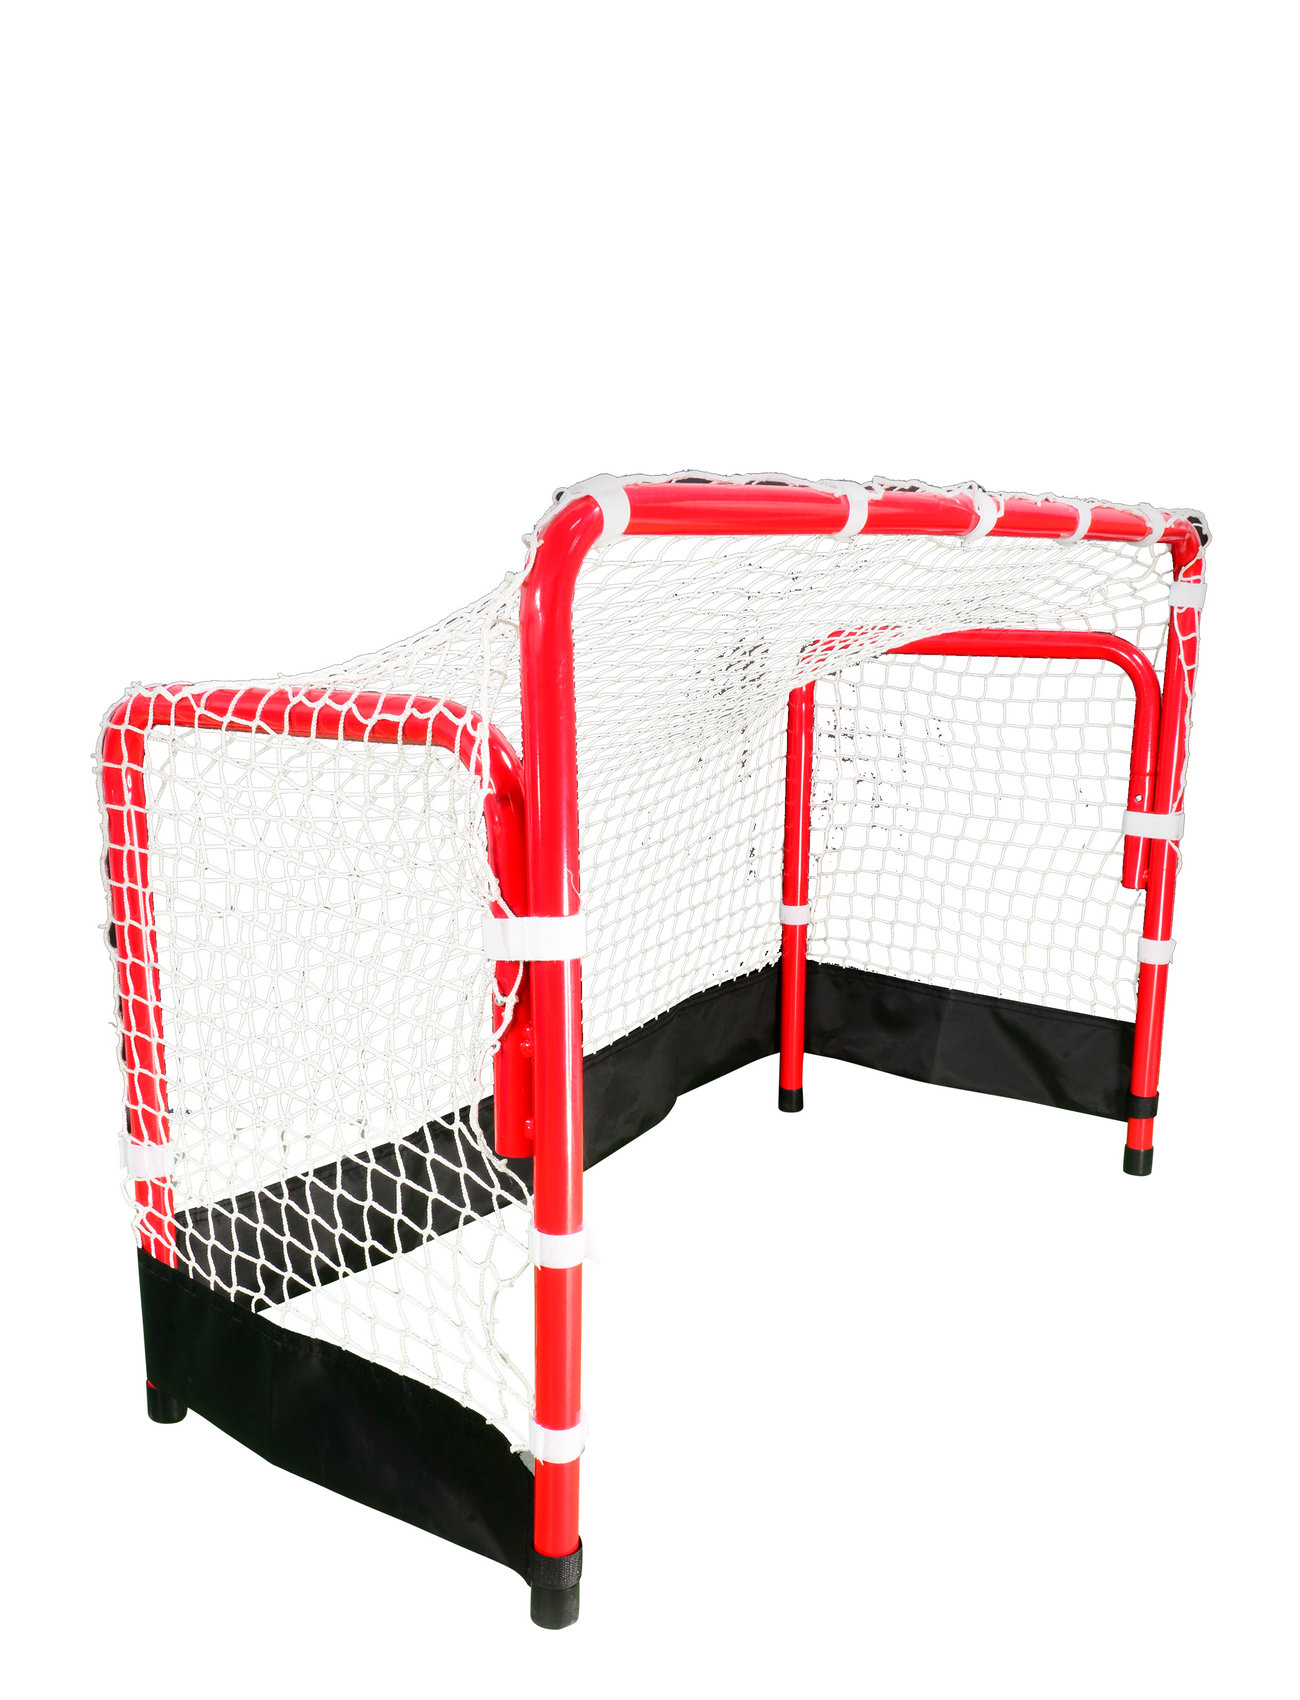 Floorball Goal 90*60*40Cm Accessories Sports Equipment Football Equipment Multi/patterned SportMe